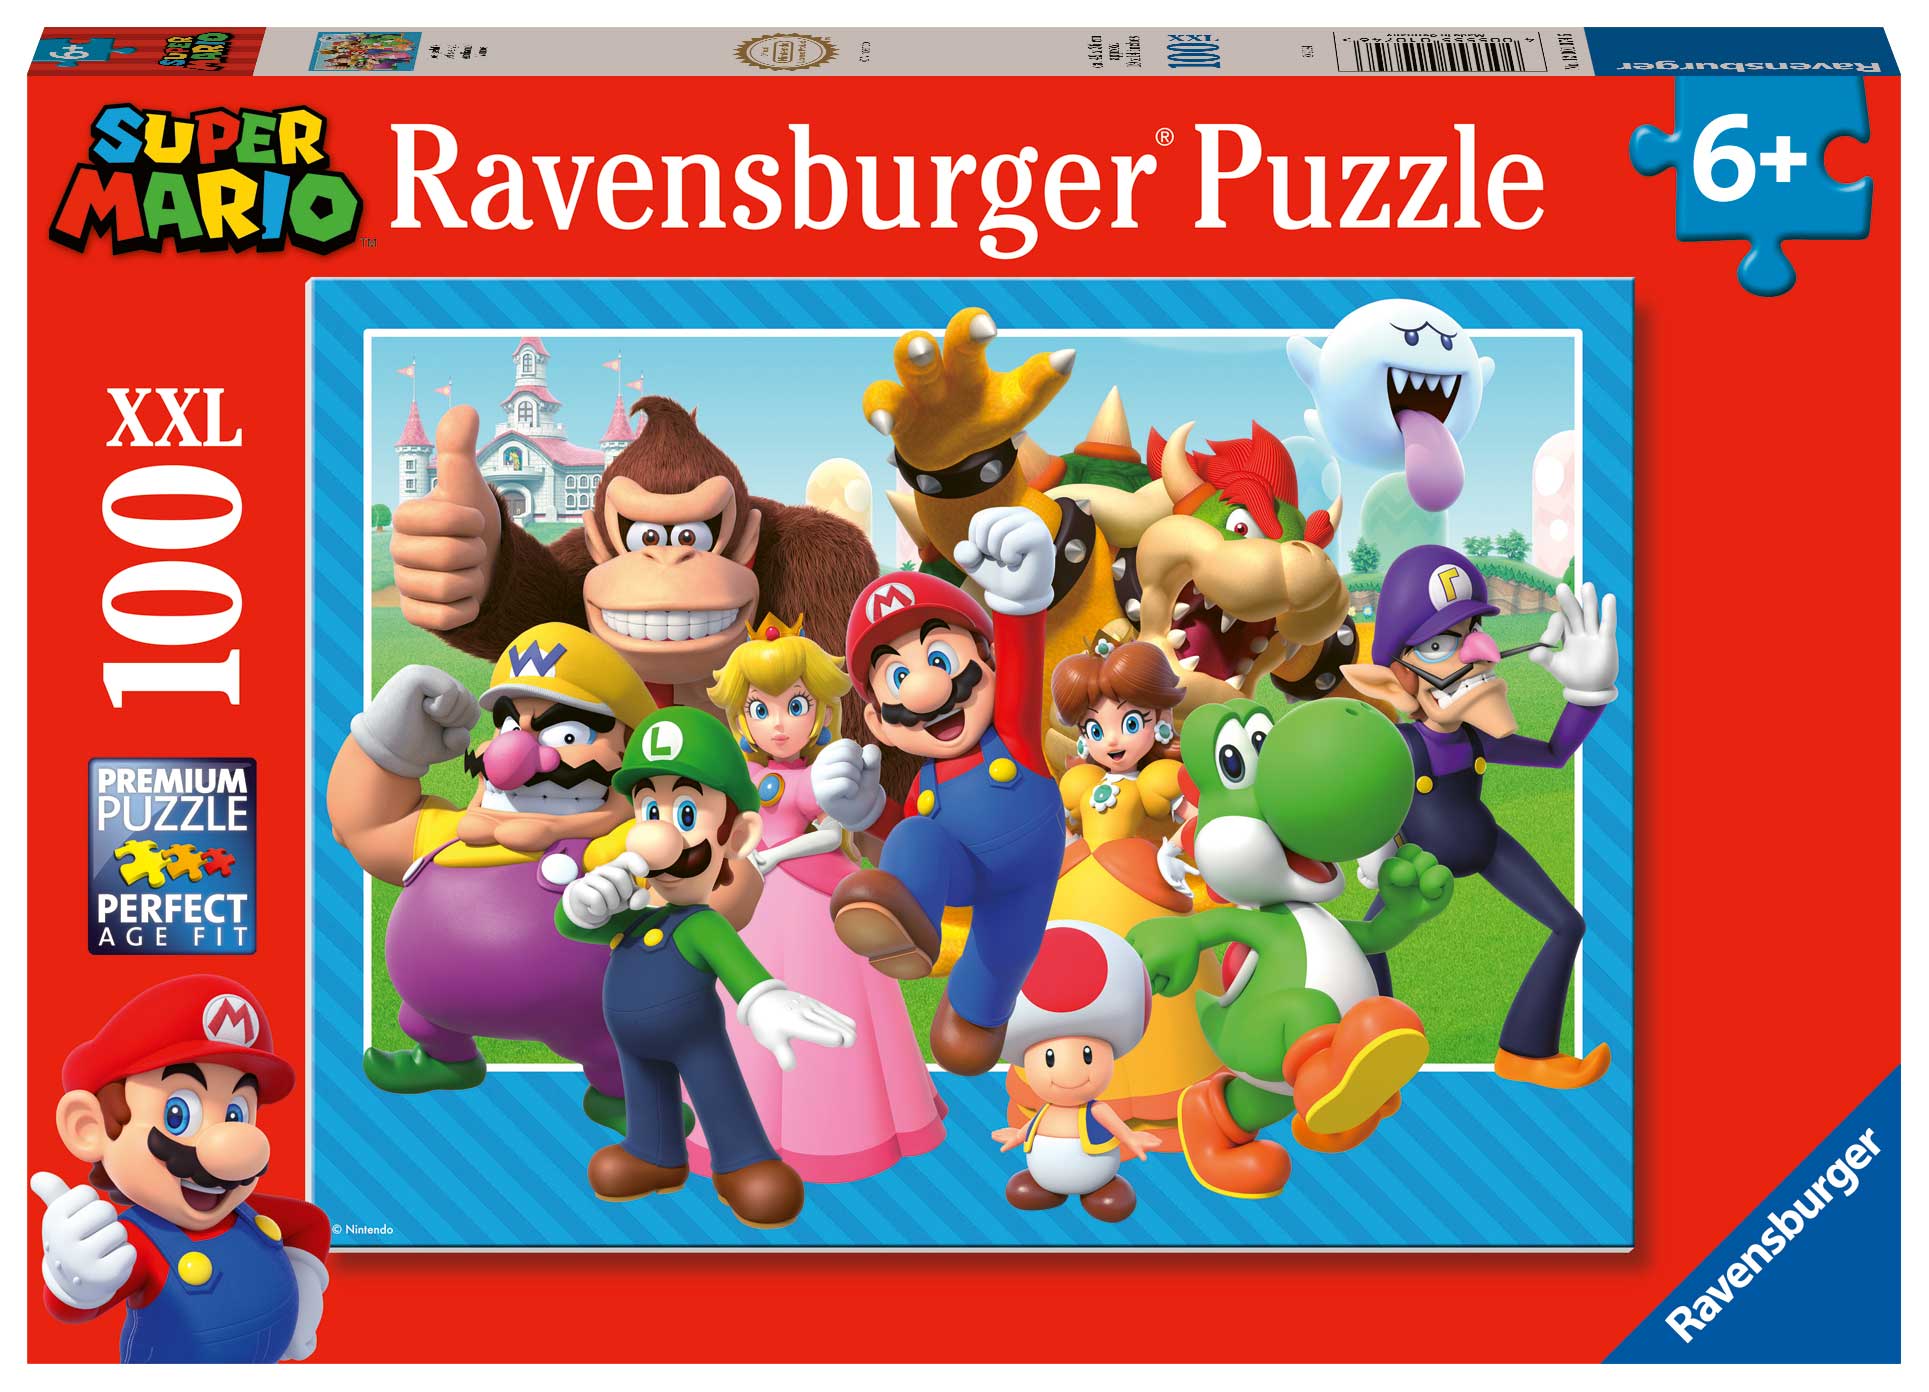 Comprar Puzzle Ravensburger Super Mario XXL 100 peças - Ravensburger-010746